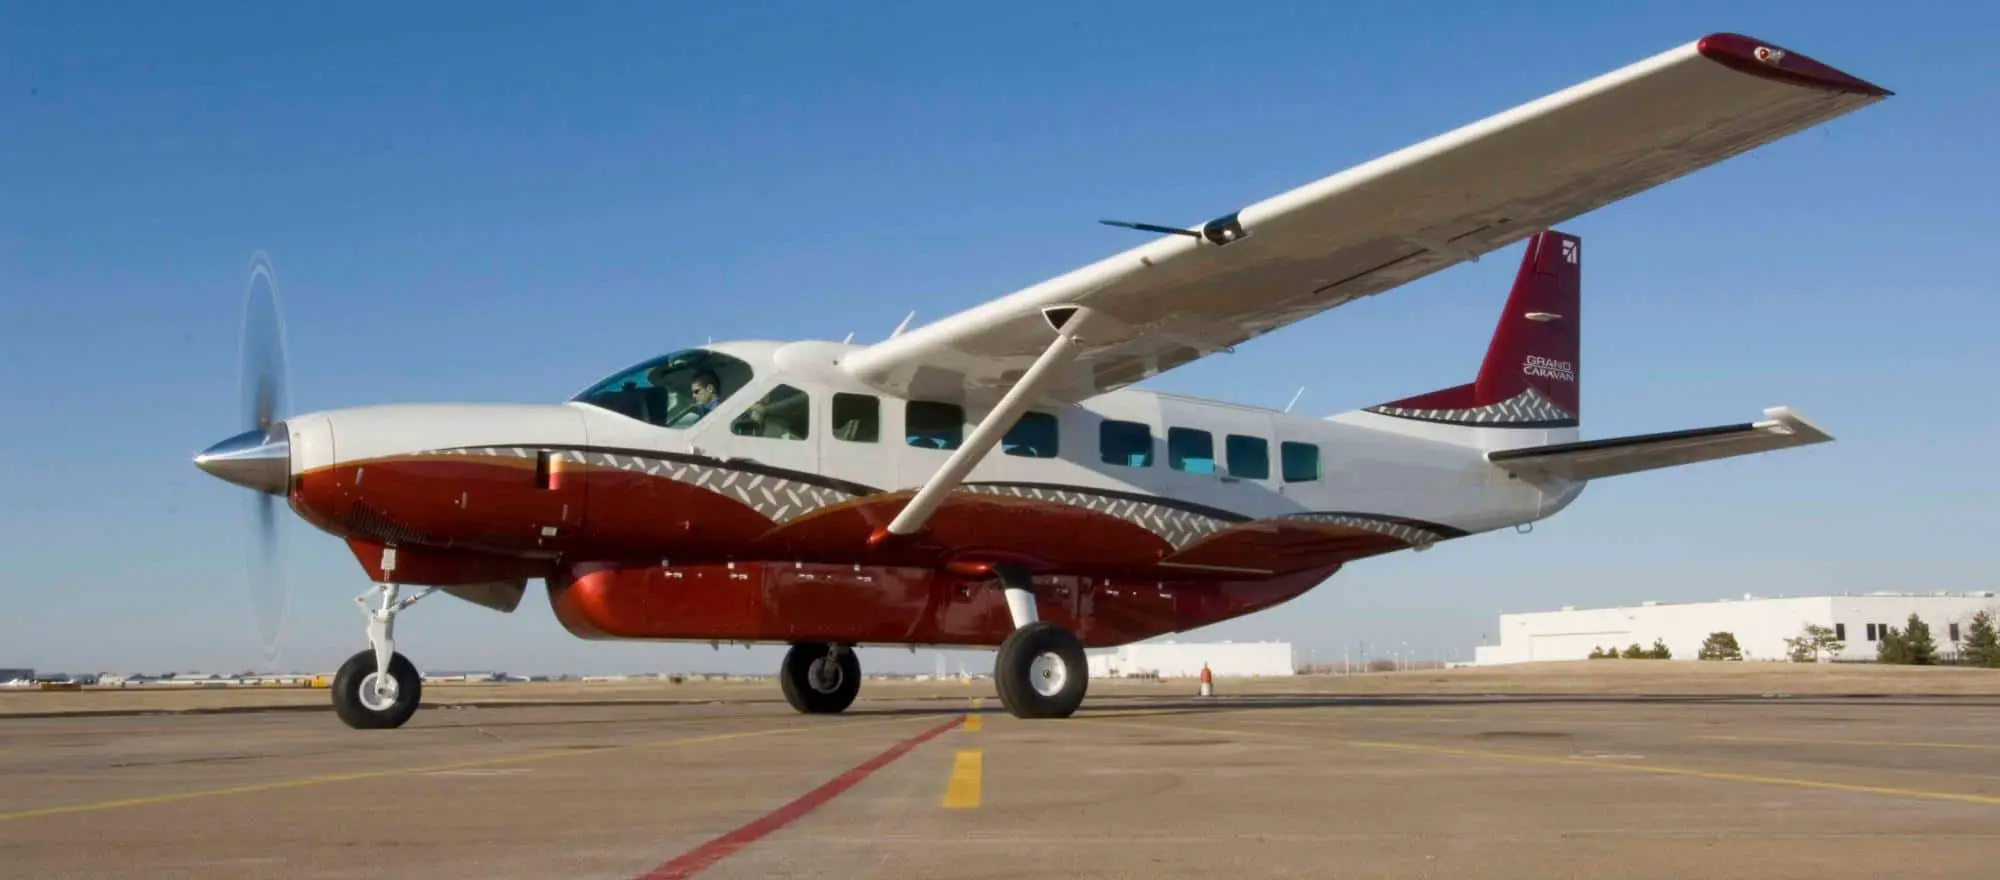 Cessna 208 plane